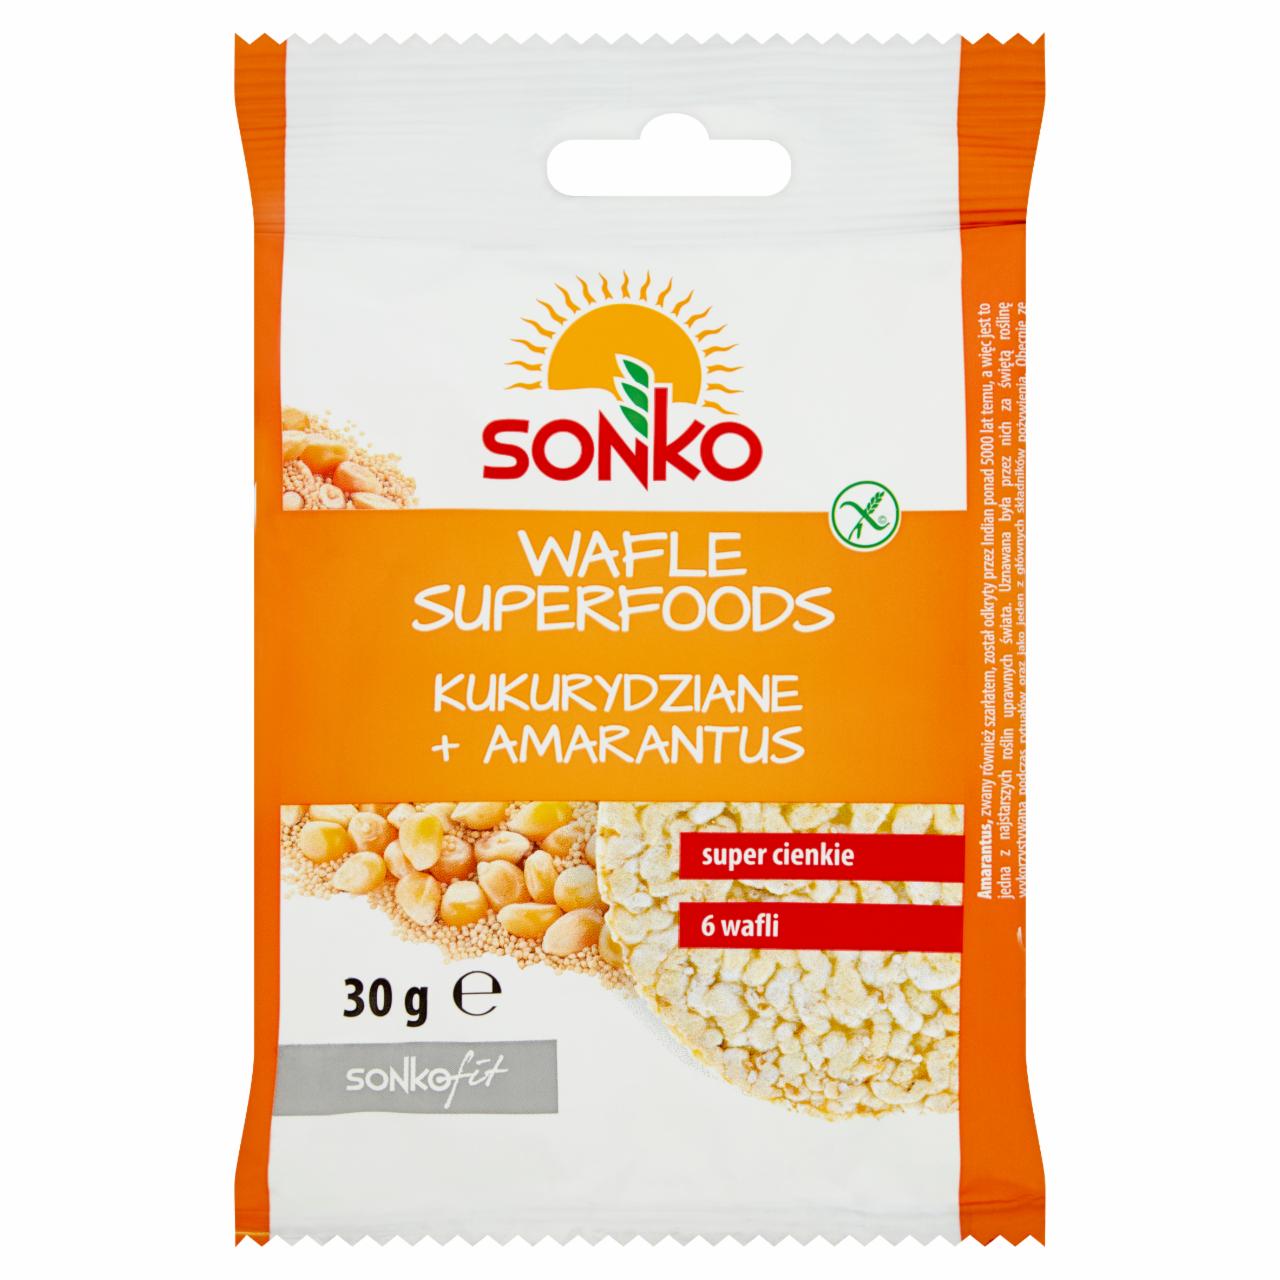 Zdjęcia - Sonko Fit Wafle superfoods kukurydziane + amarantus 30 g